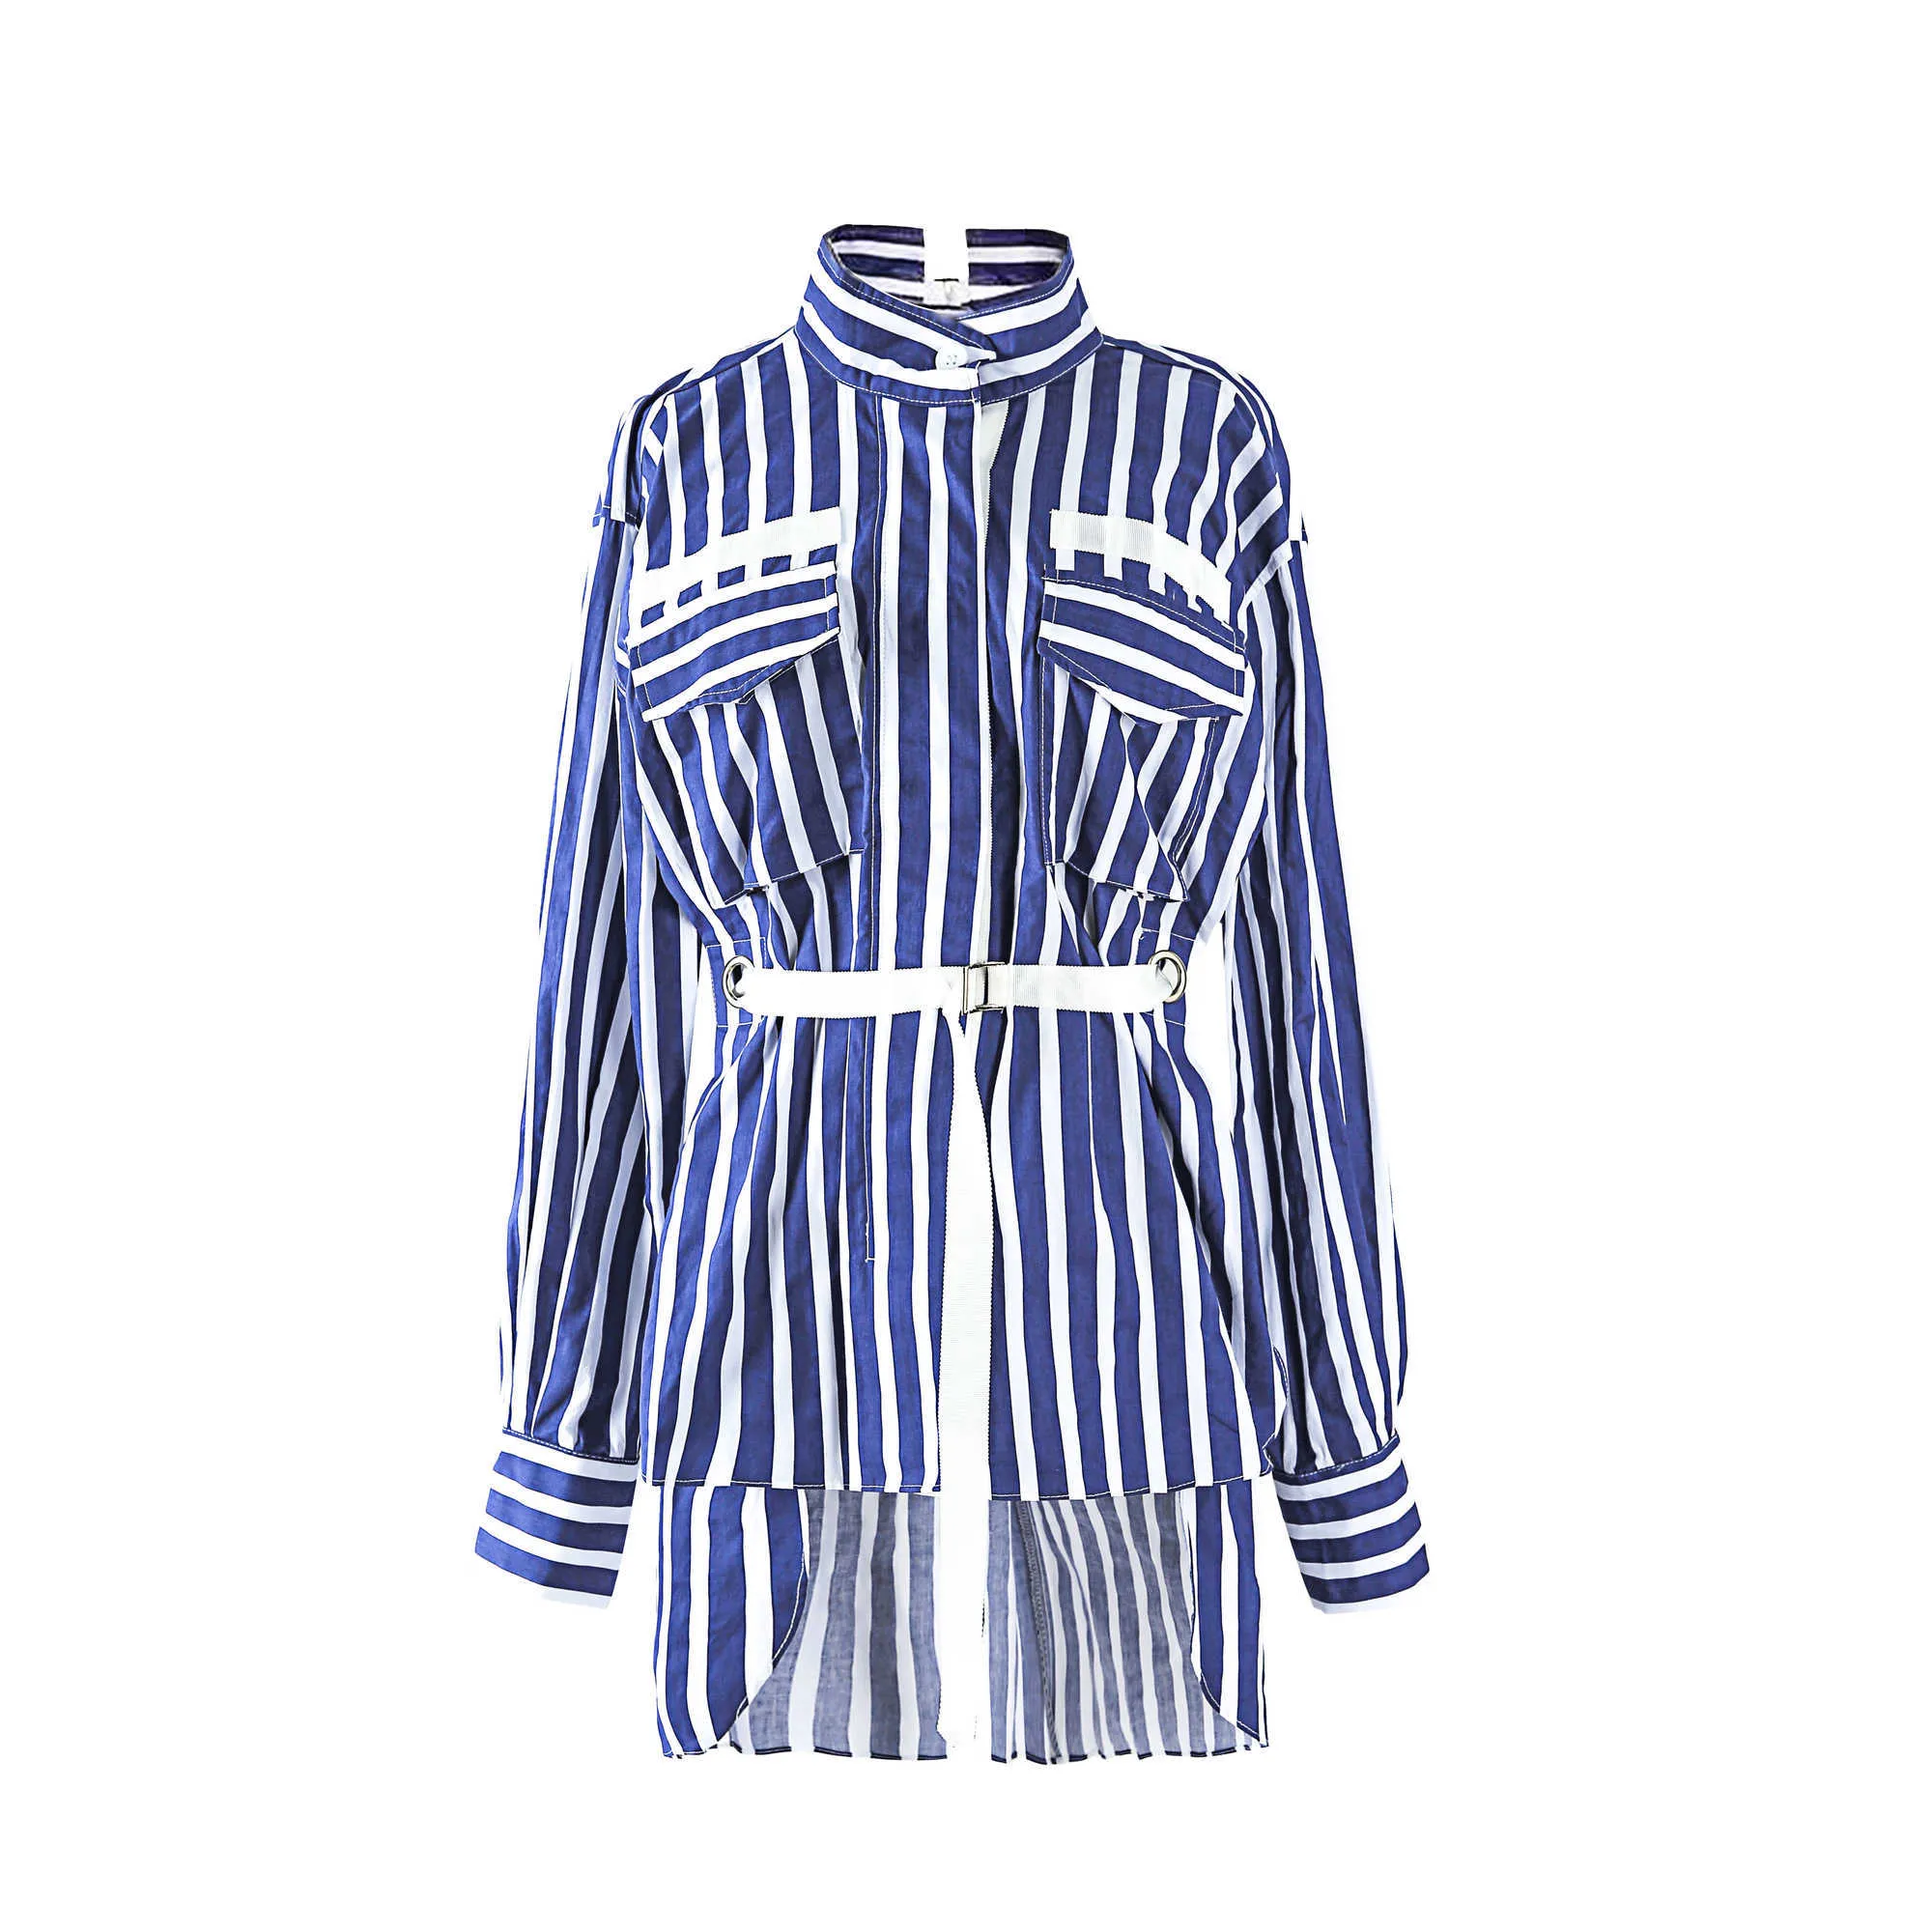 Lente mode blauwe en witte verticale gestreepte stand full shirt vrouwen achterband top 210615